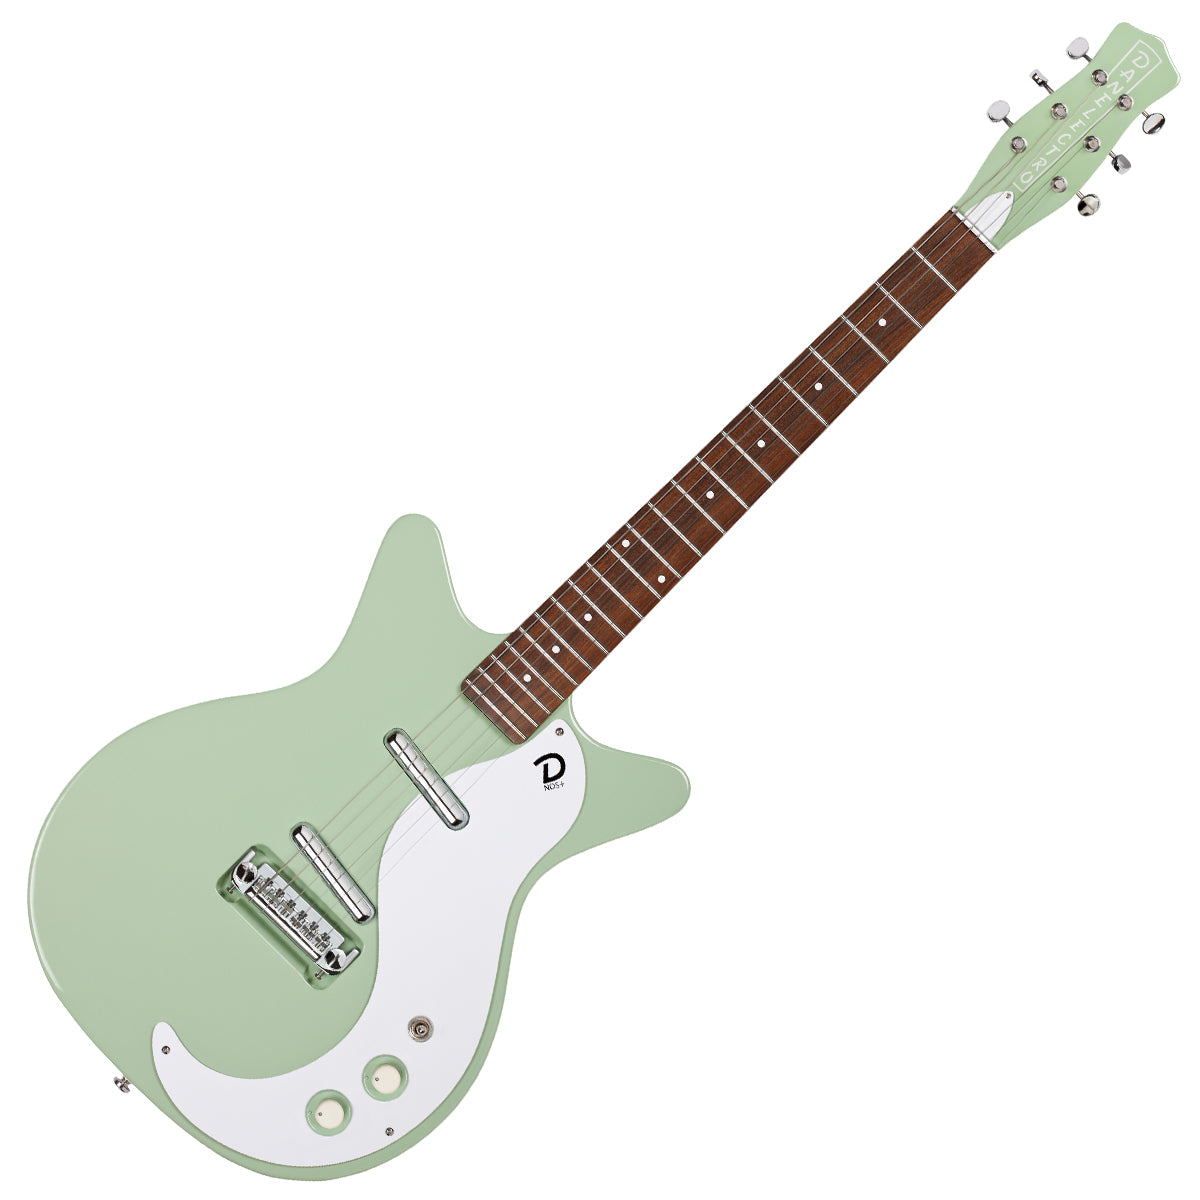 An image of Danelectro Dc59 Nos Guitar - Keen Green | PMT Online